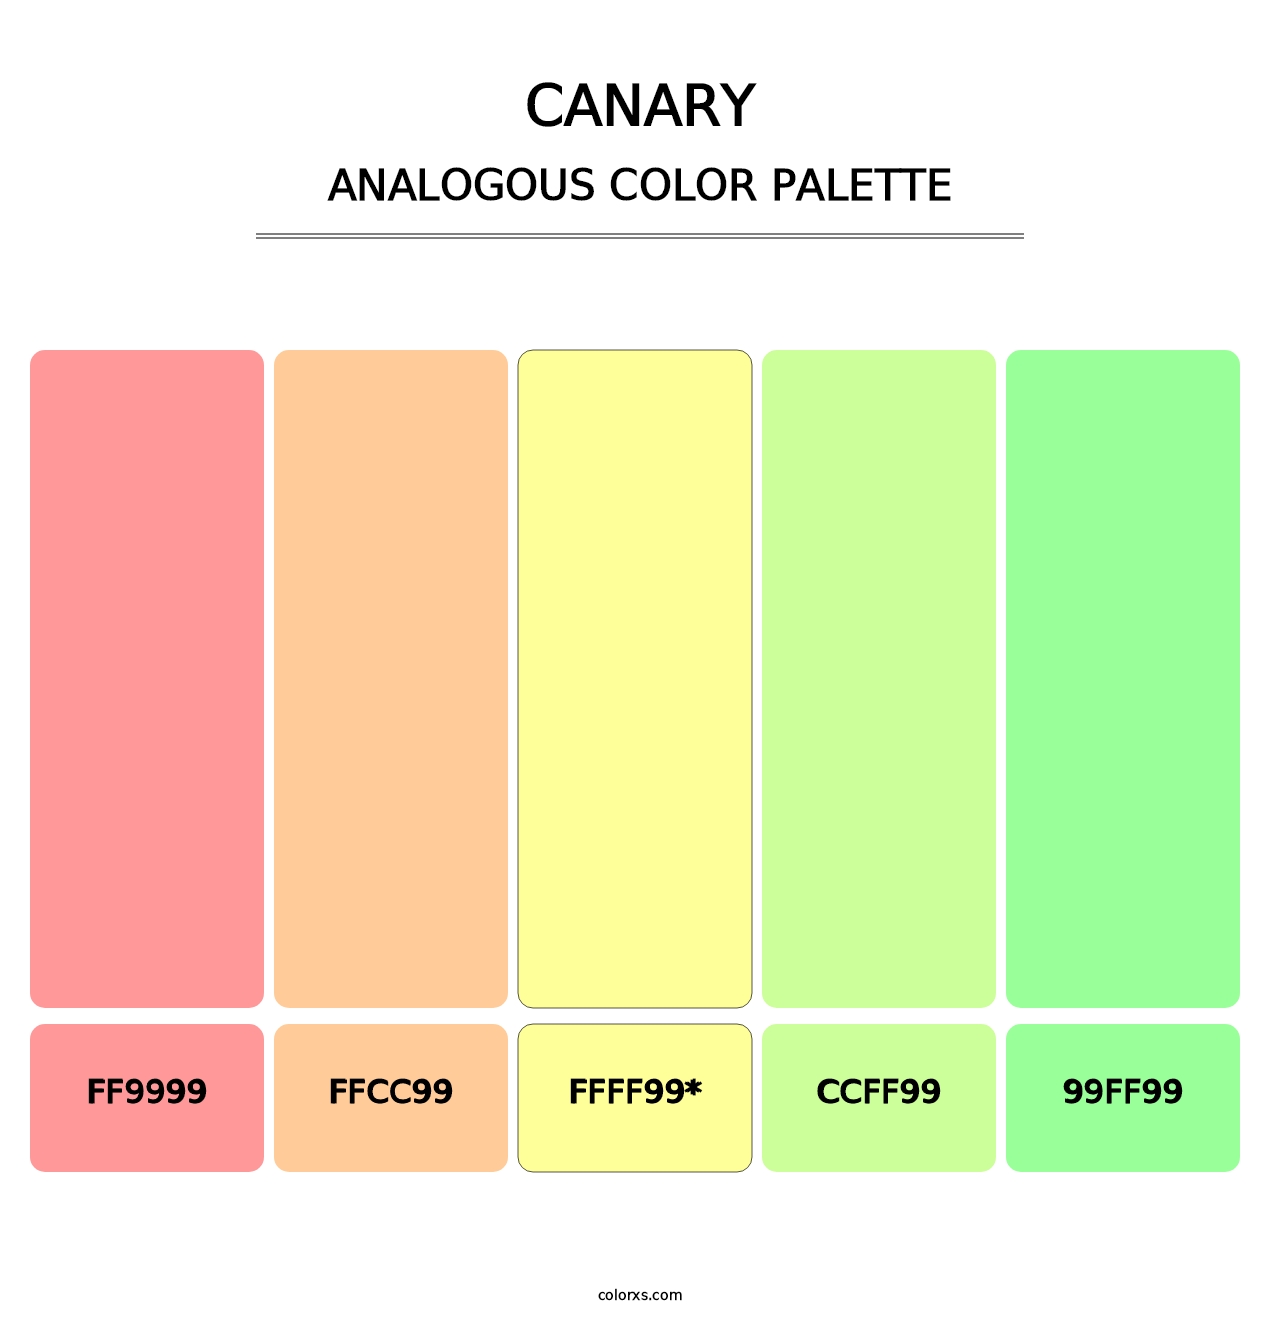 Canary - Analogous Color Palette